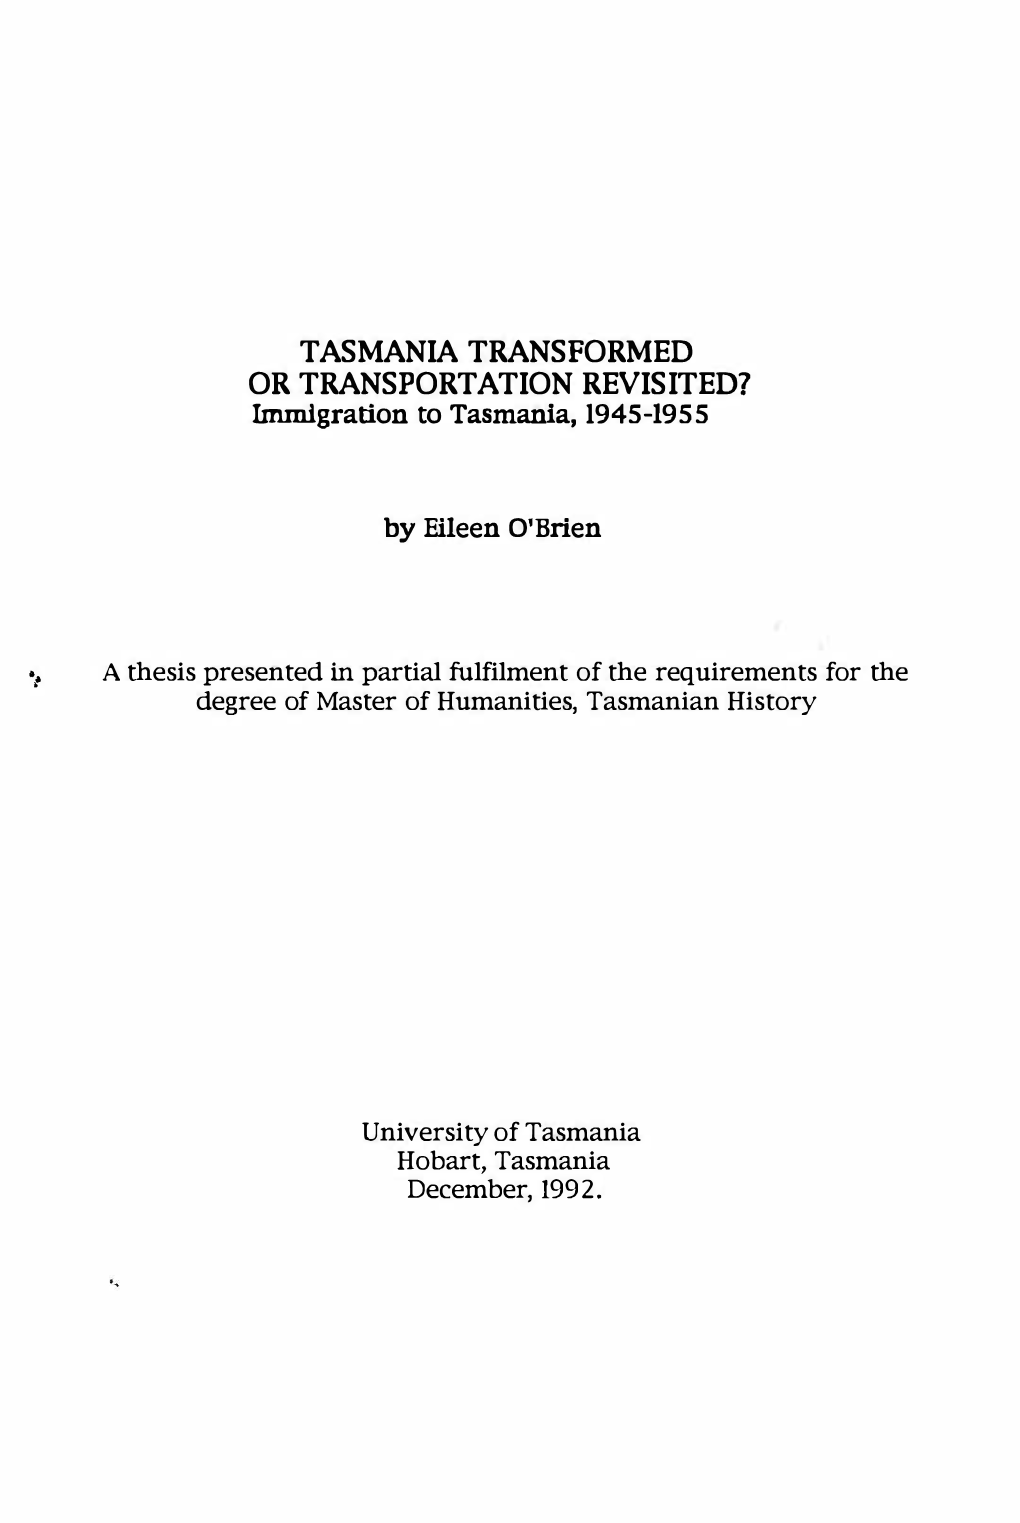 TASMANIA TRANSFORMED OR TRANSPORTATION REVISITED? Immigration to Tasmania, 1945-1955